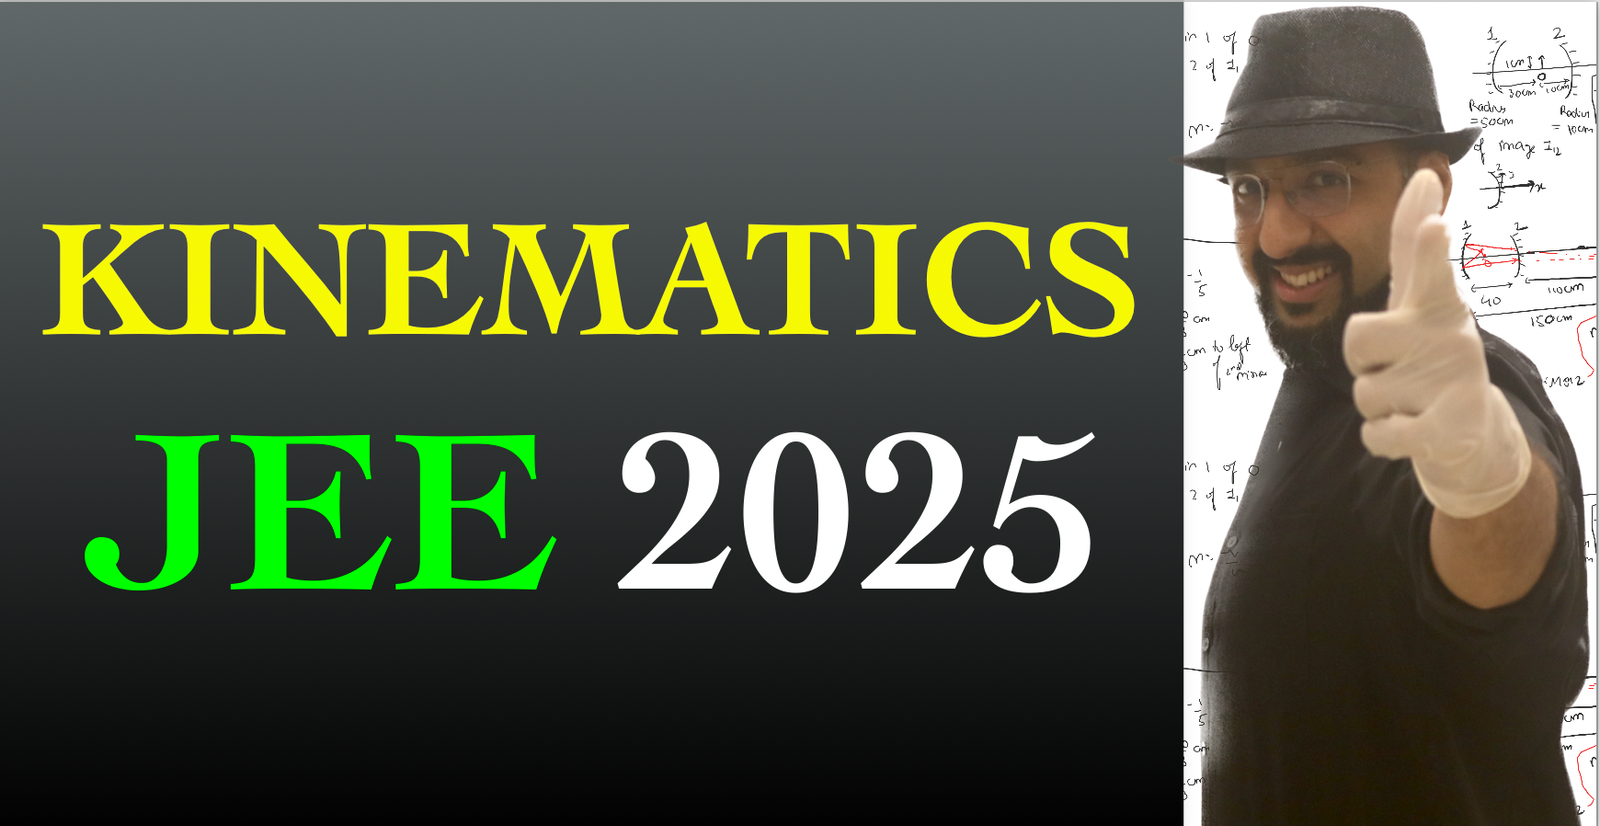 Kinematics JEE 2025